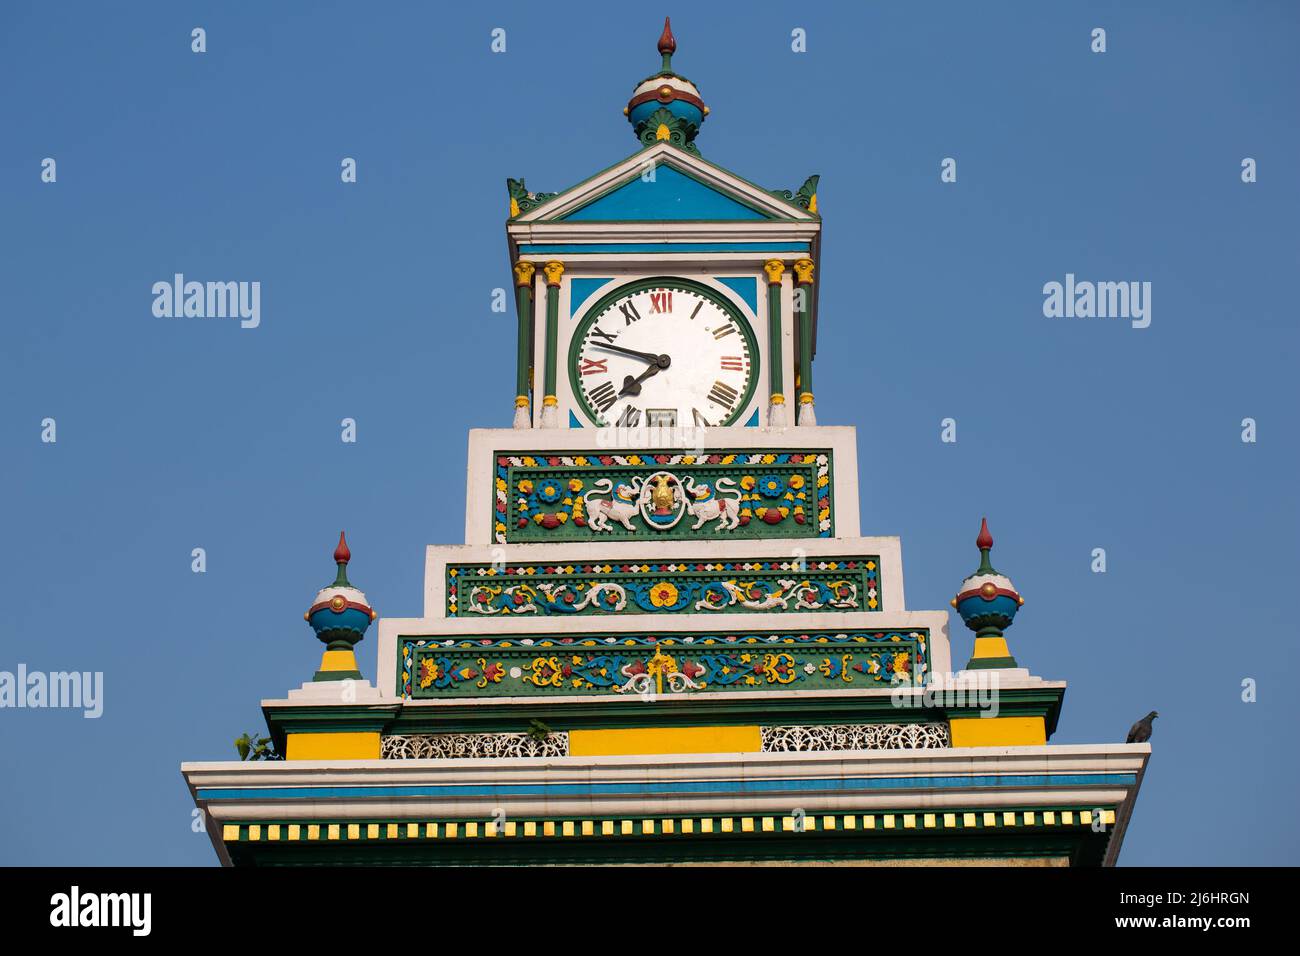 Close up of Landmark historic clock tower Chikka Gadiyara aka Dufferin Clock Tower with the clock still showing time at Mysuru, Karnataka, India Stock Photo